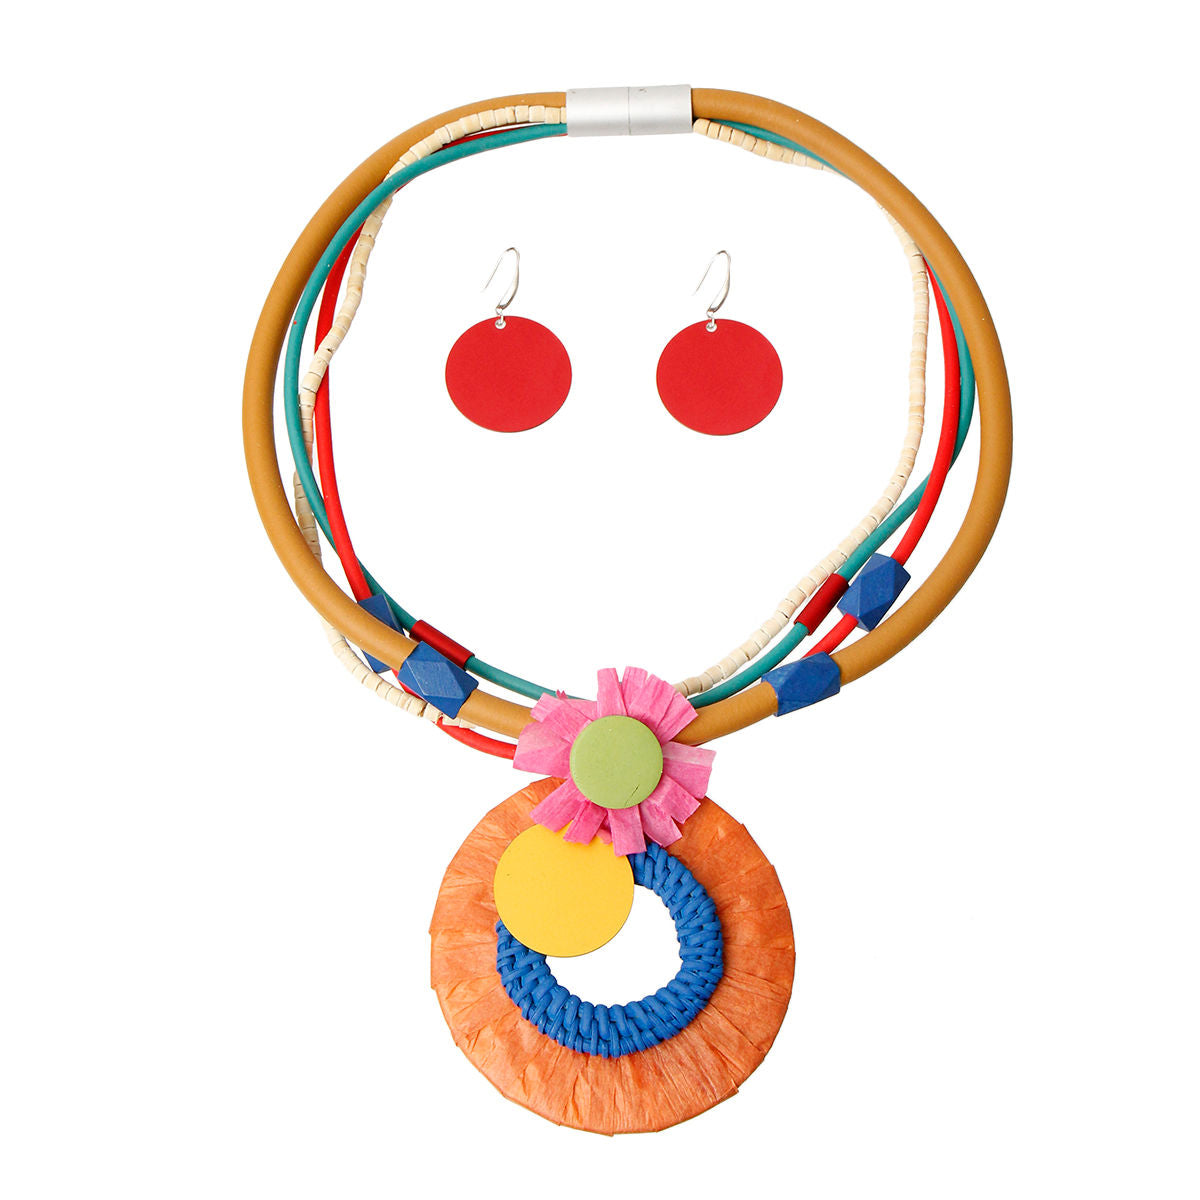 Multicolored Raffia Pendant Necklace Set